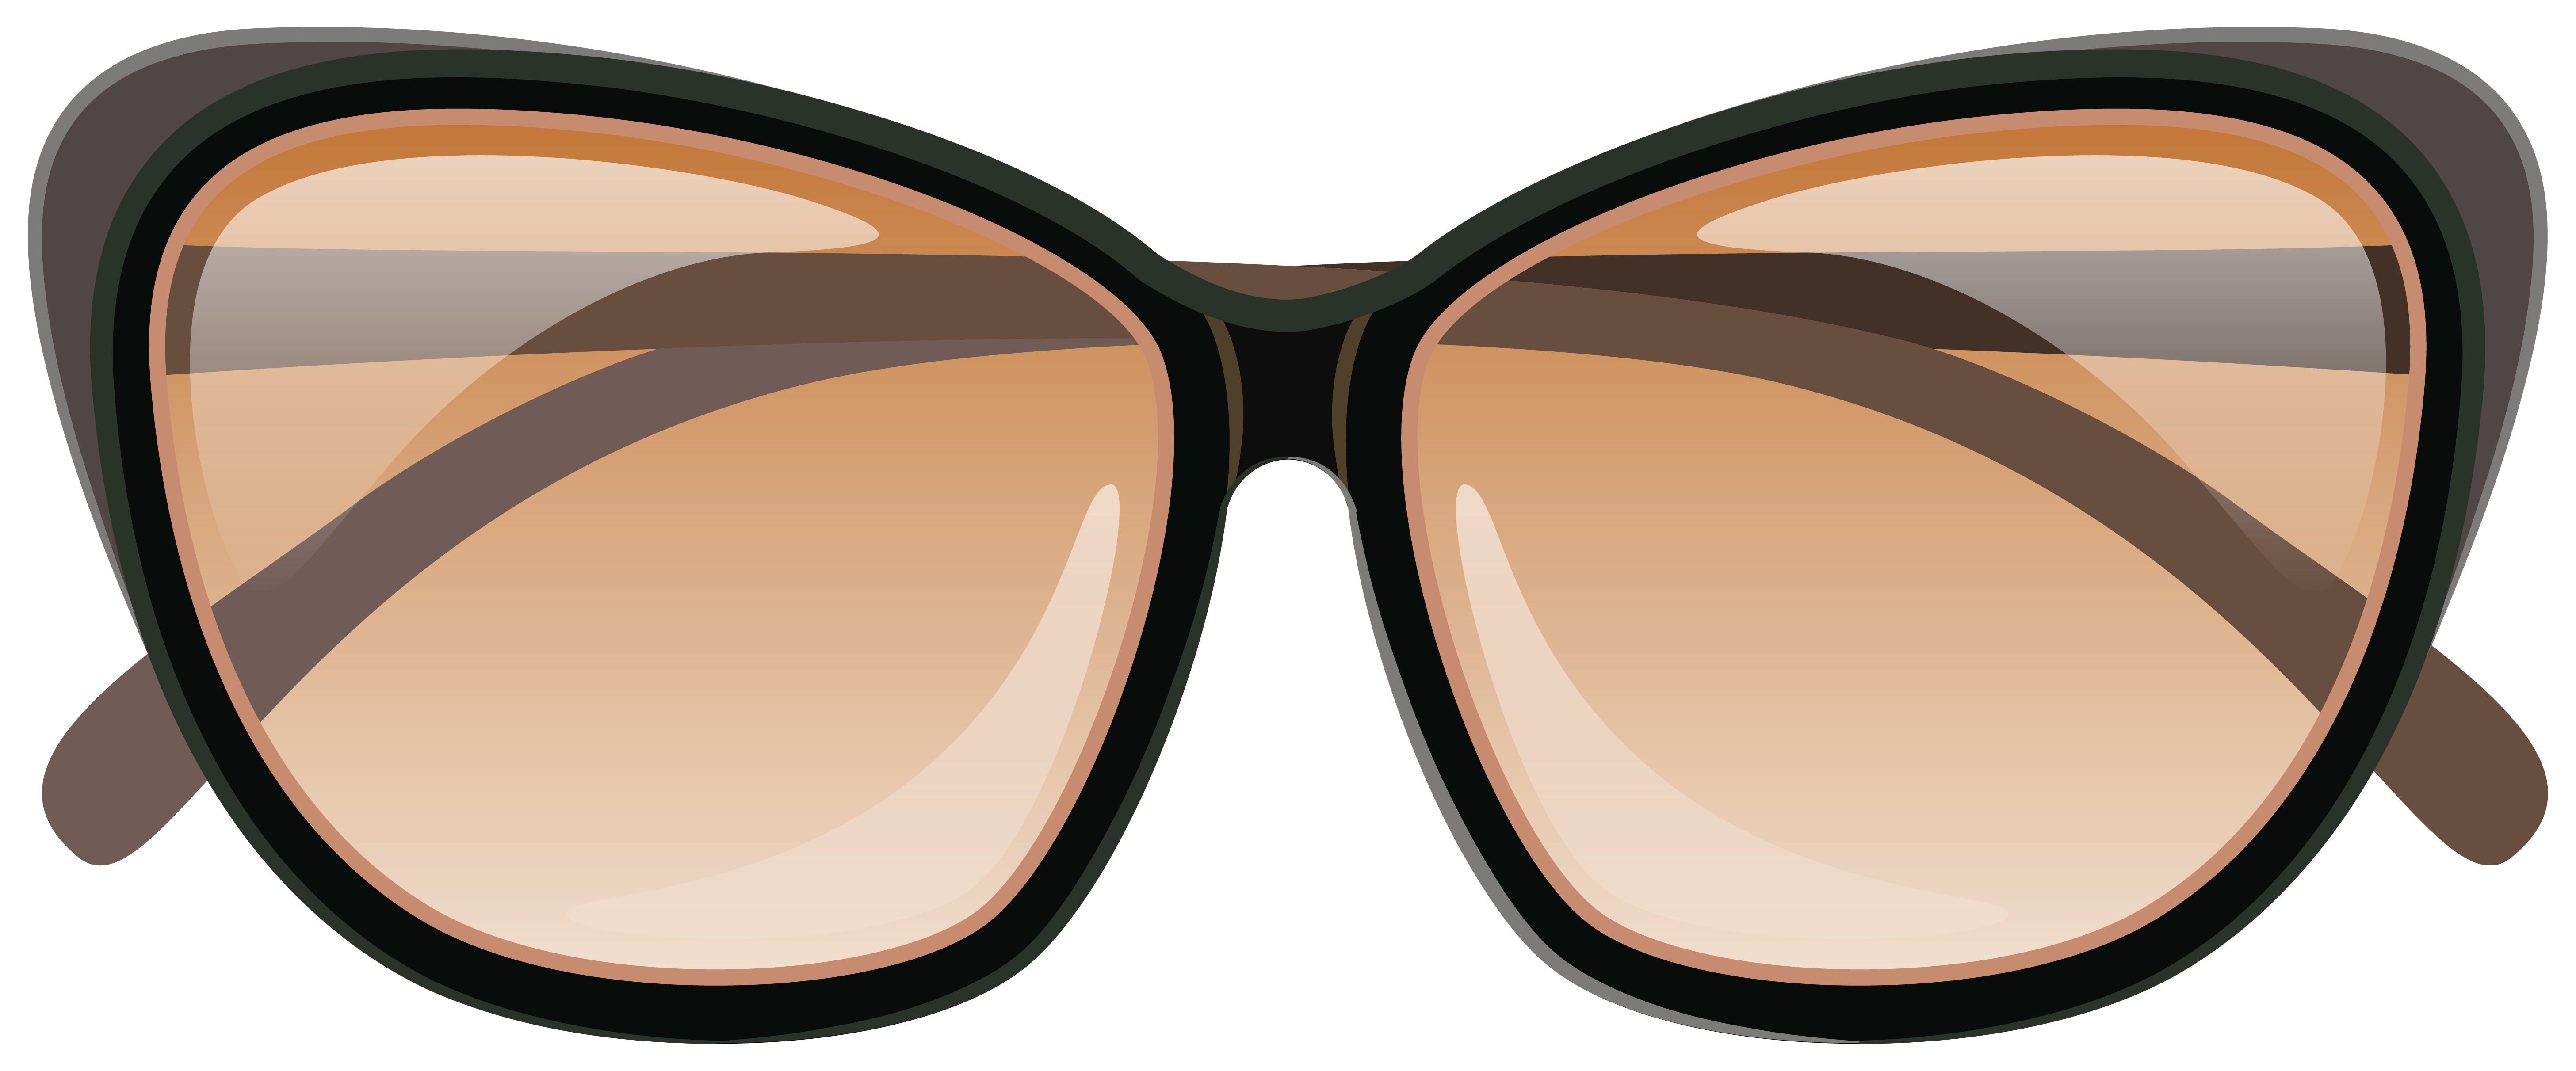 Brown Sunglasses Aviator Free HD Image Clipart